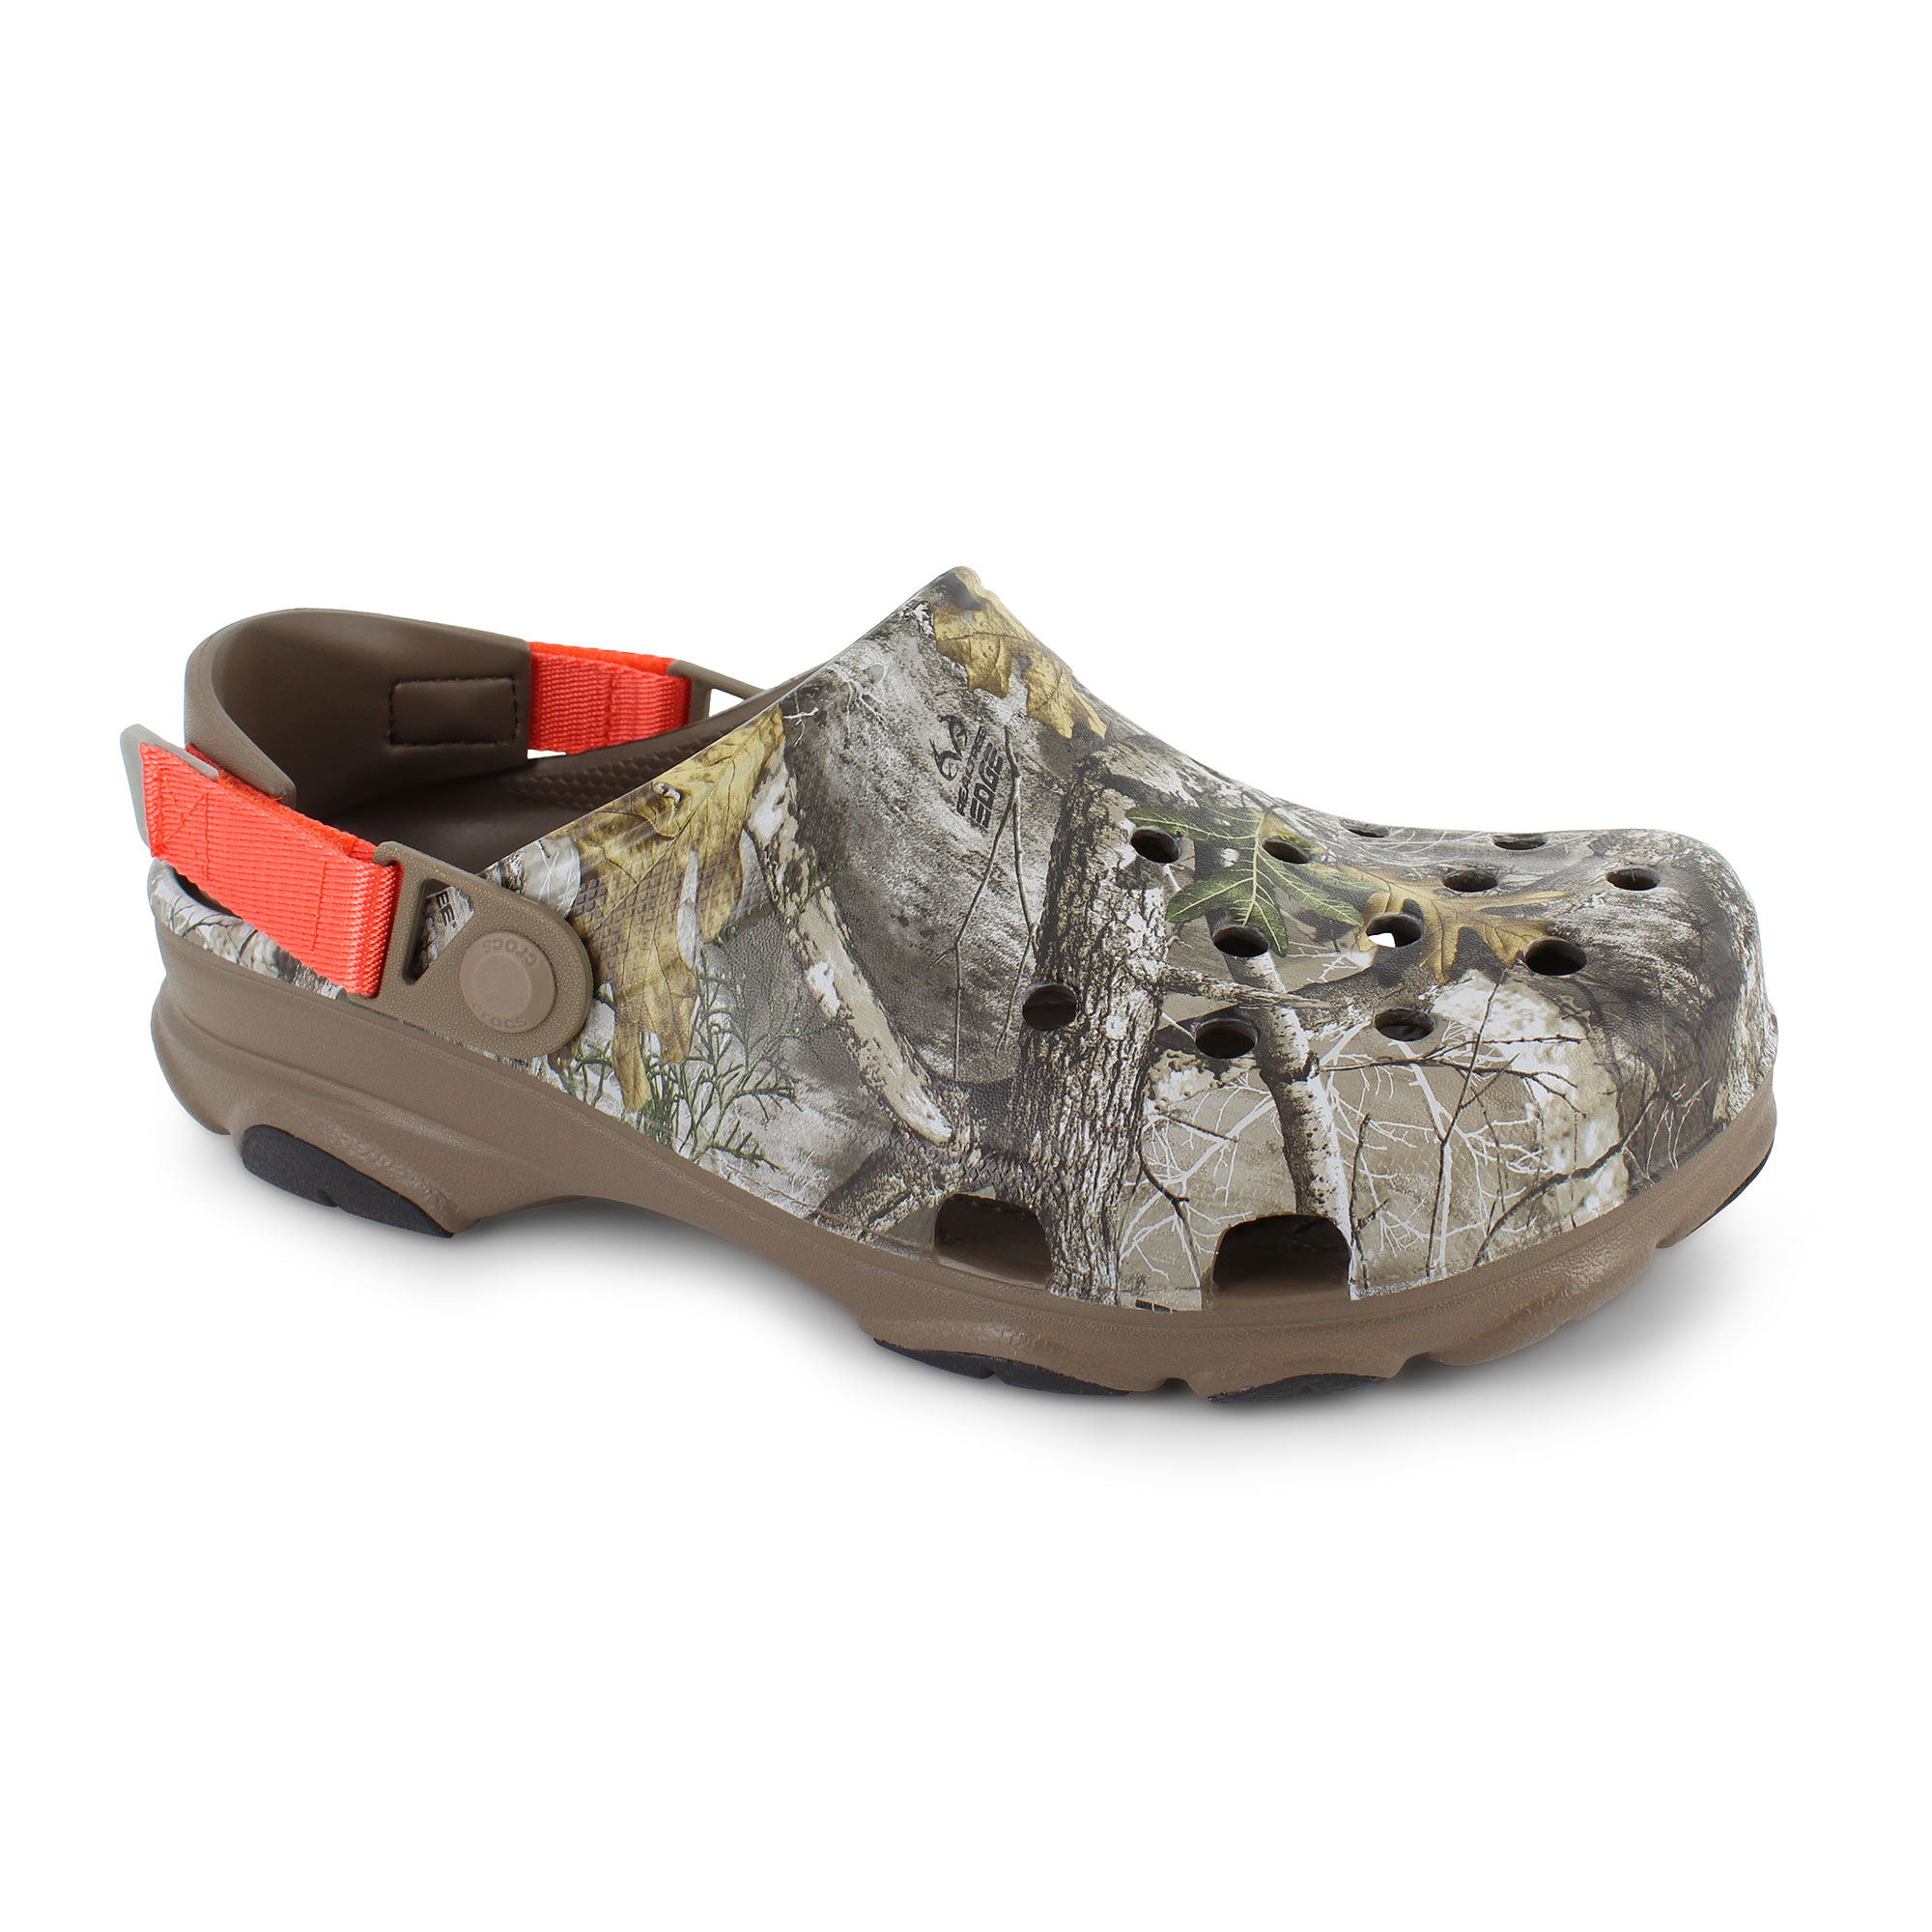 crocs shoe department